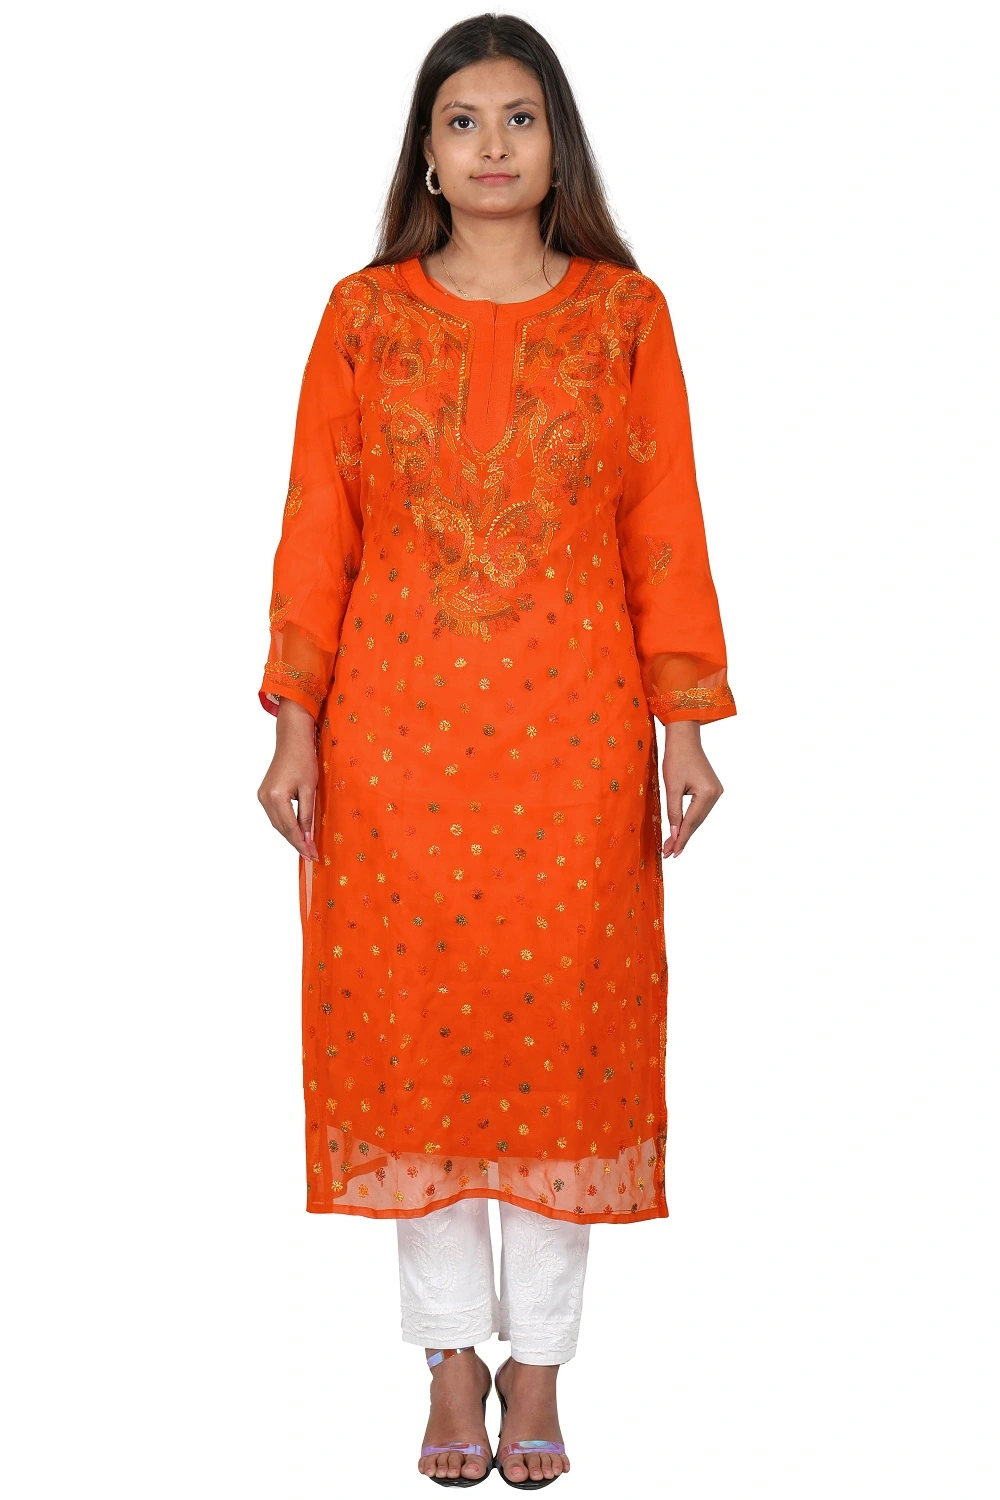 Lavangi Lucknow Chikankari Multi color Resham Thread Hand Embroidered Orange Chiffon Kurti